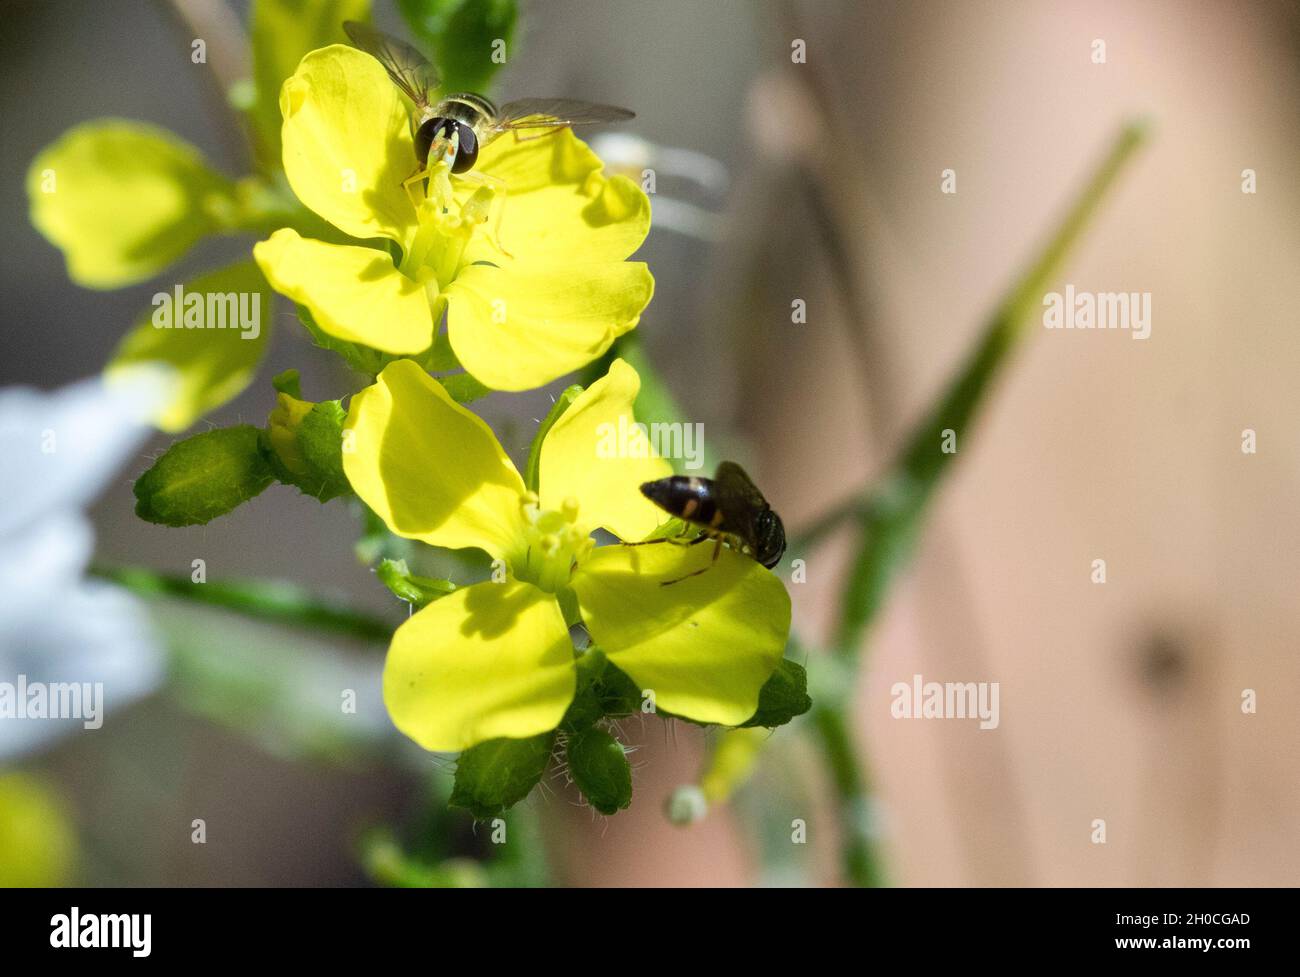 Hoverflies on yellow flower Stock Photo